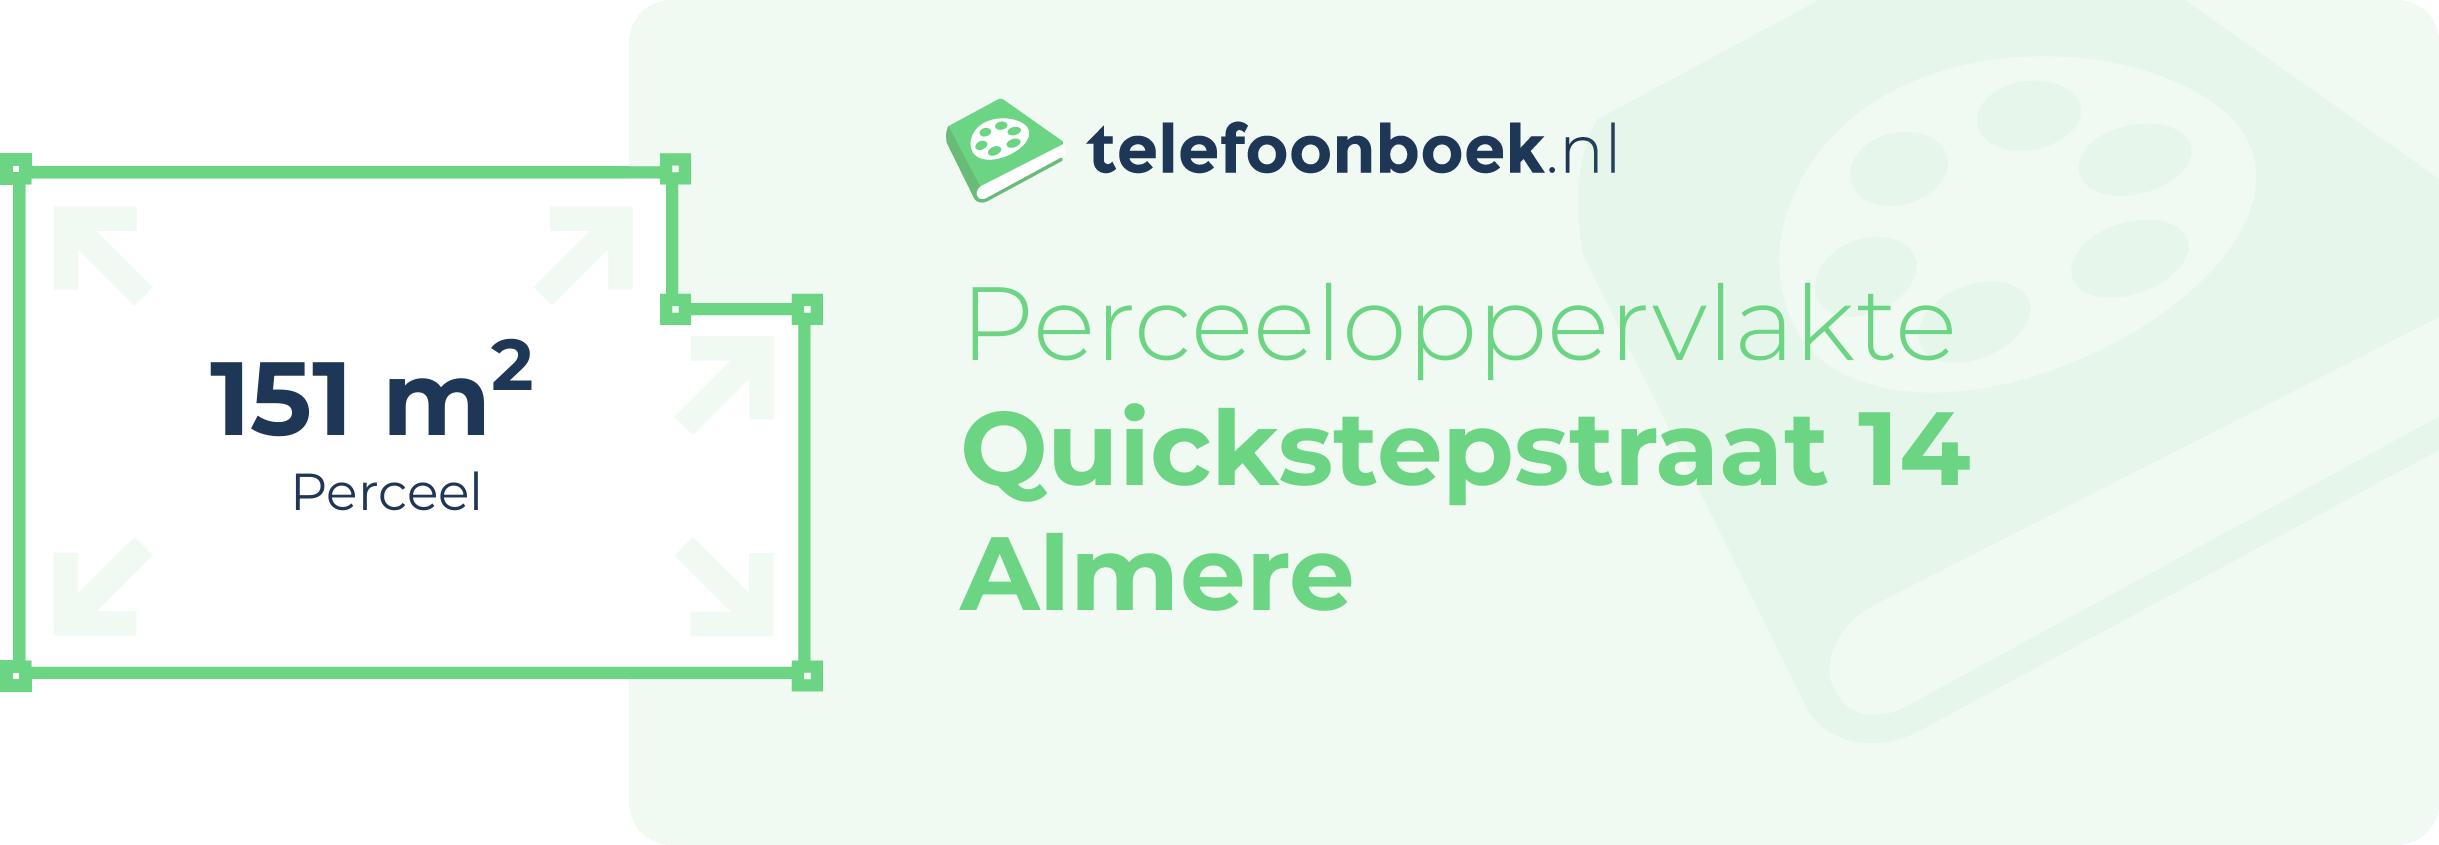 Perceeloppervlakte Quickstepstraat 14 Almere